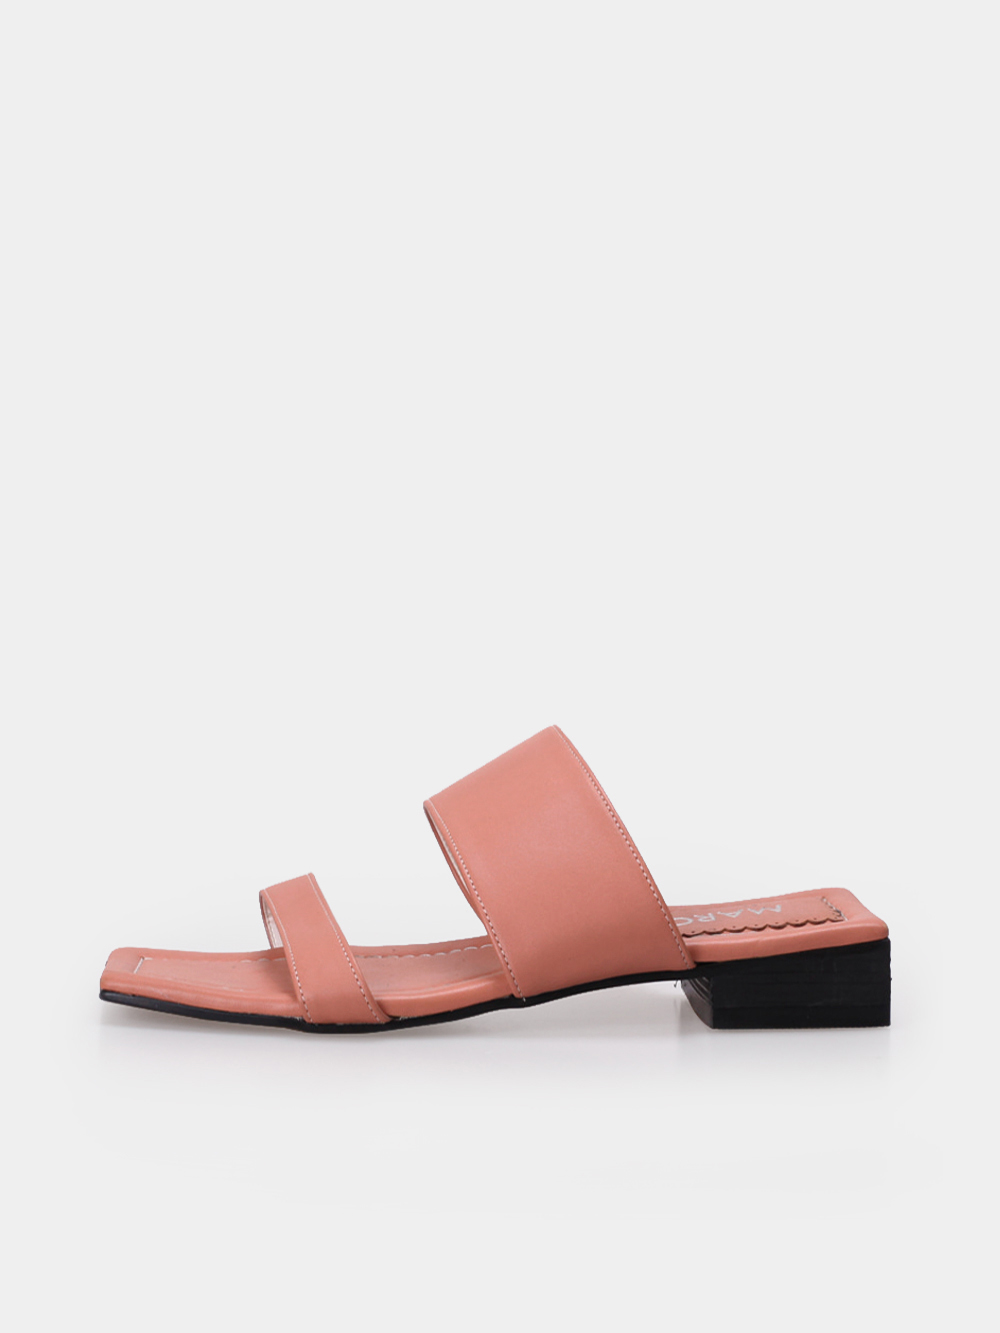 [Out of stock] Mrc03s Urban Flat Sandal (Peach)